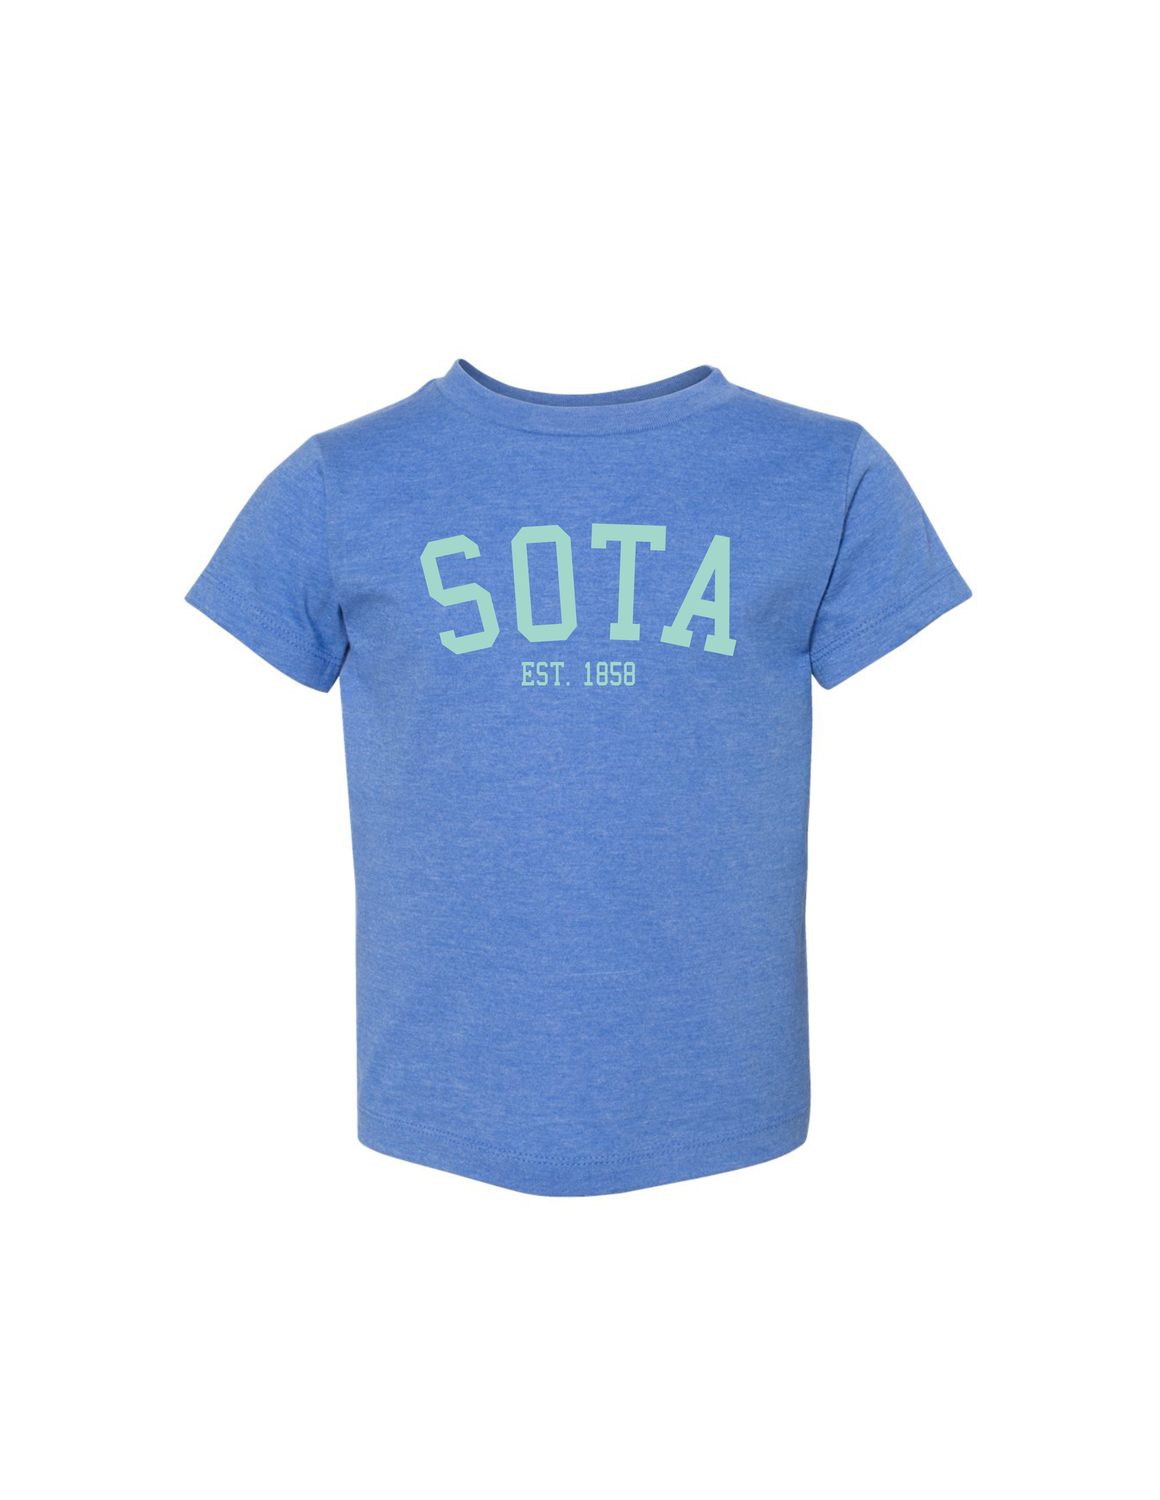 Toddler Sota Tee [blue] - Northern Print Co.